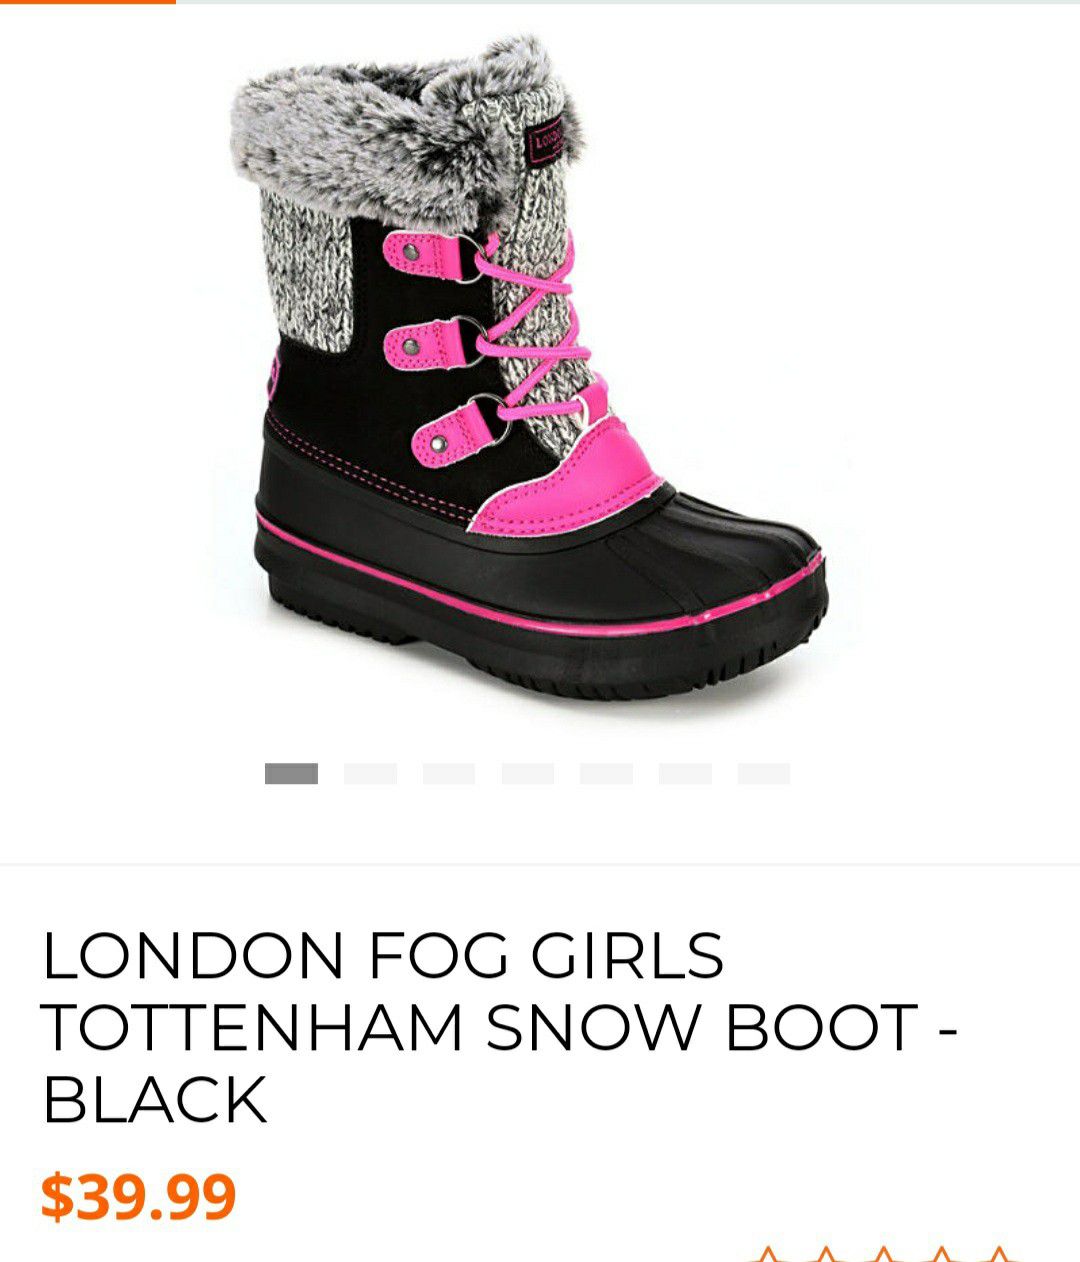 London fog girl snow boots size 2